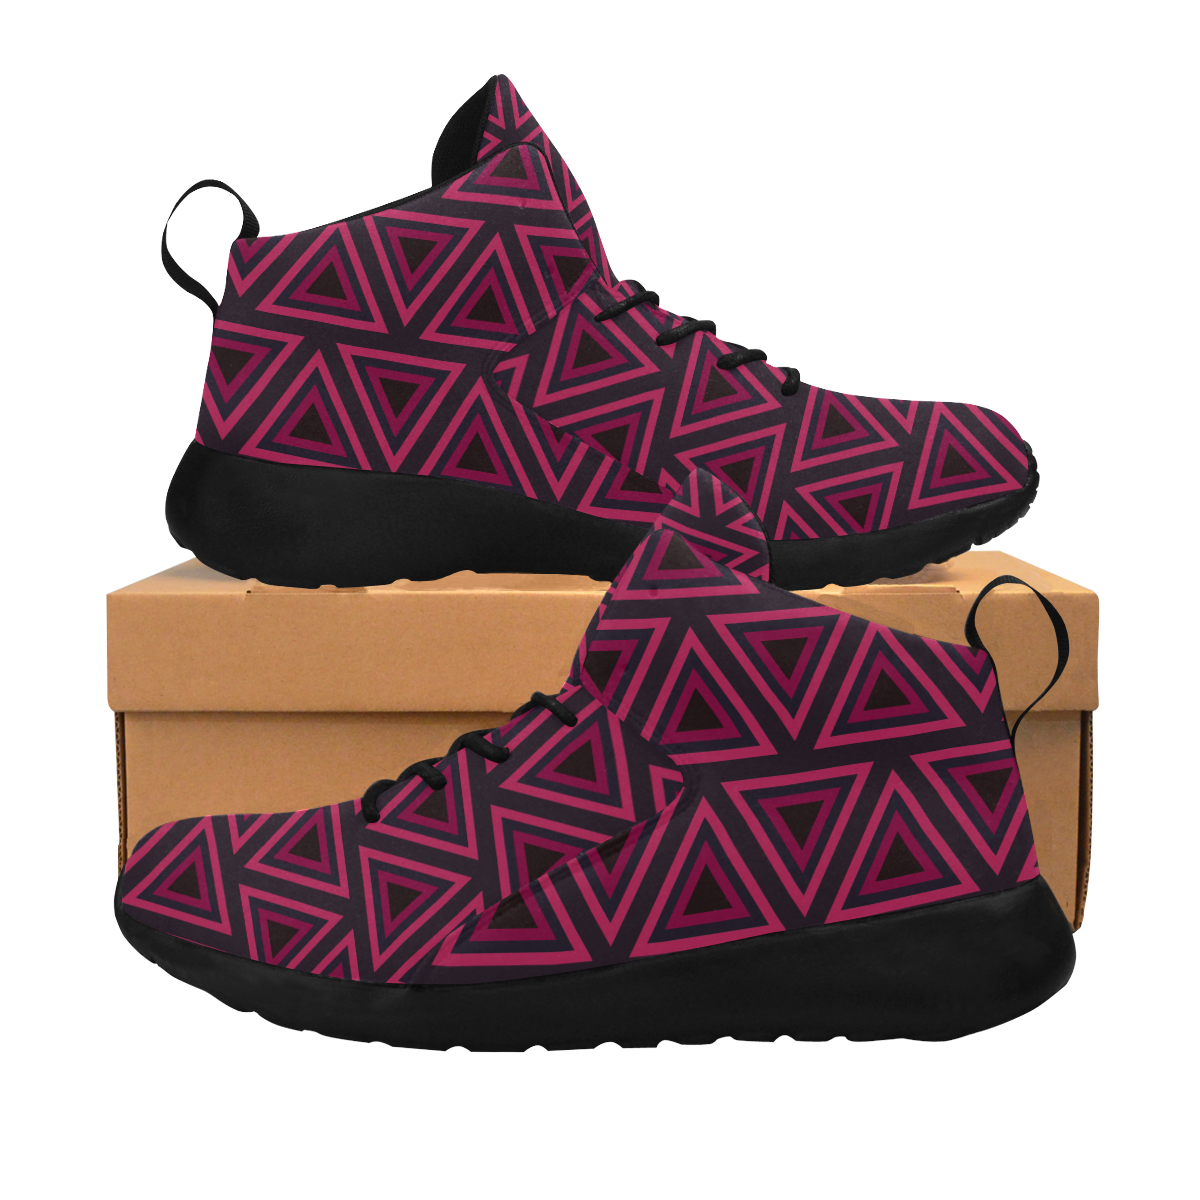 Tribal Ethnic Triangles Men's Chukka Training Shoes (Model 57502)